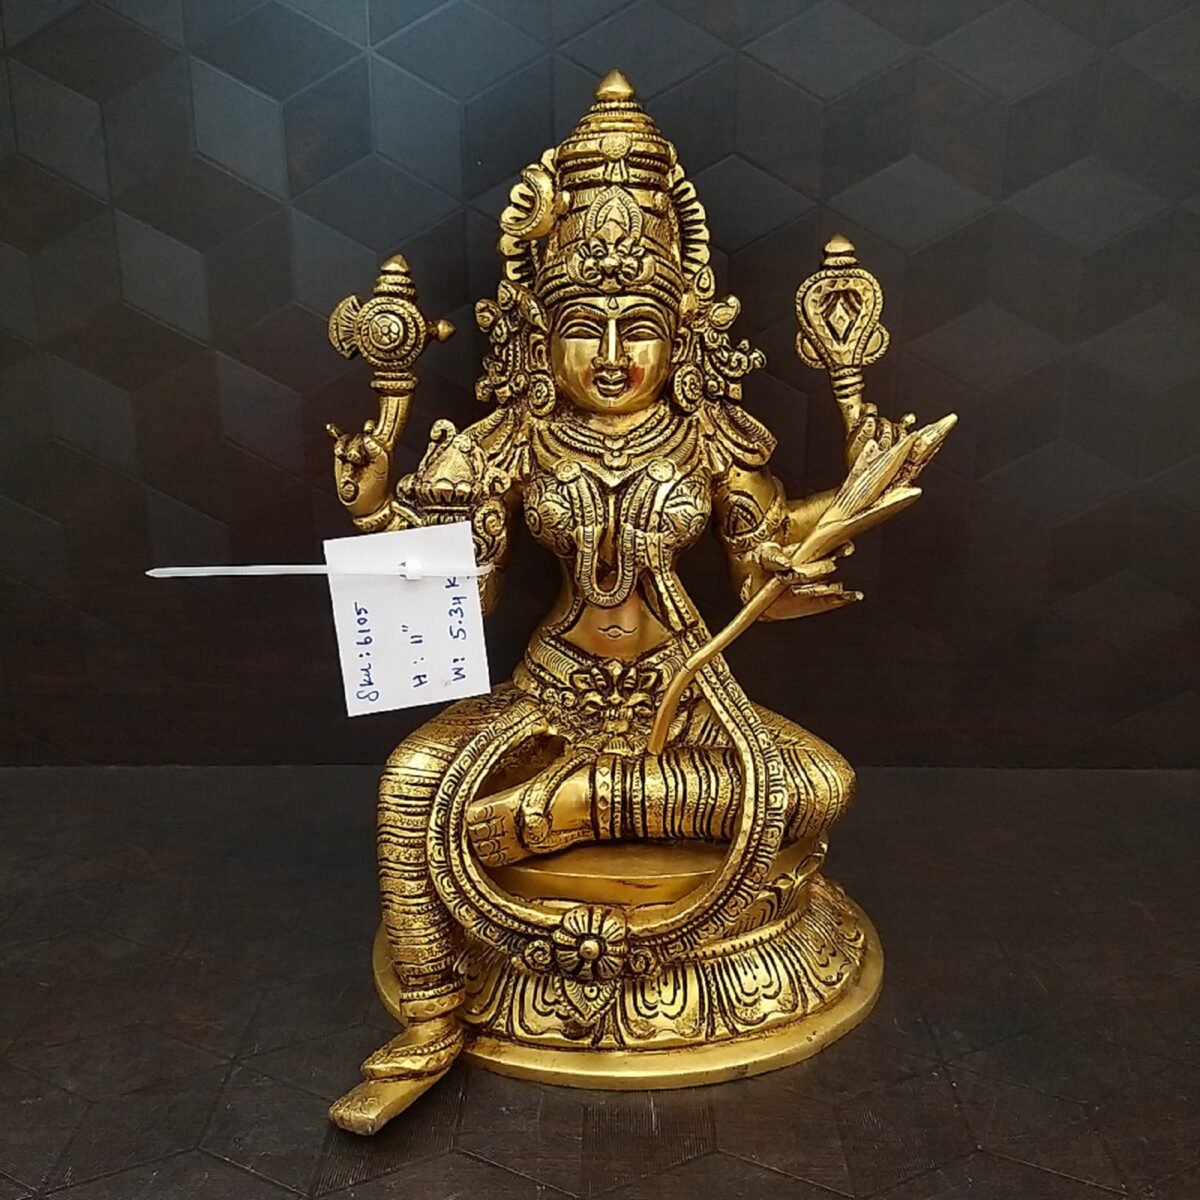 brass rajarajeshwari idol big home decor pooja items hindu god statues gift buy online india 6105